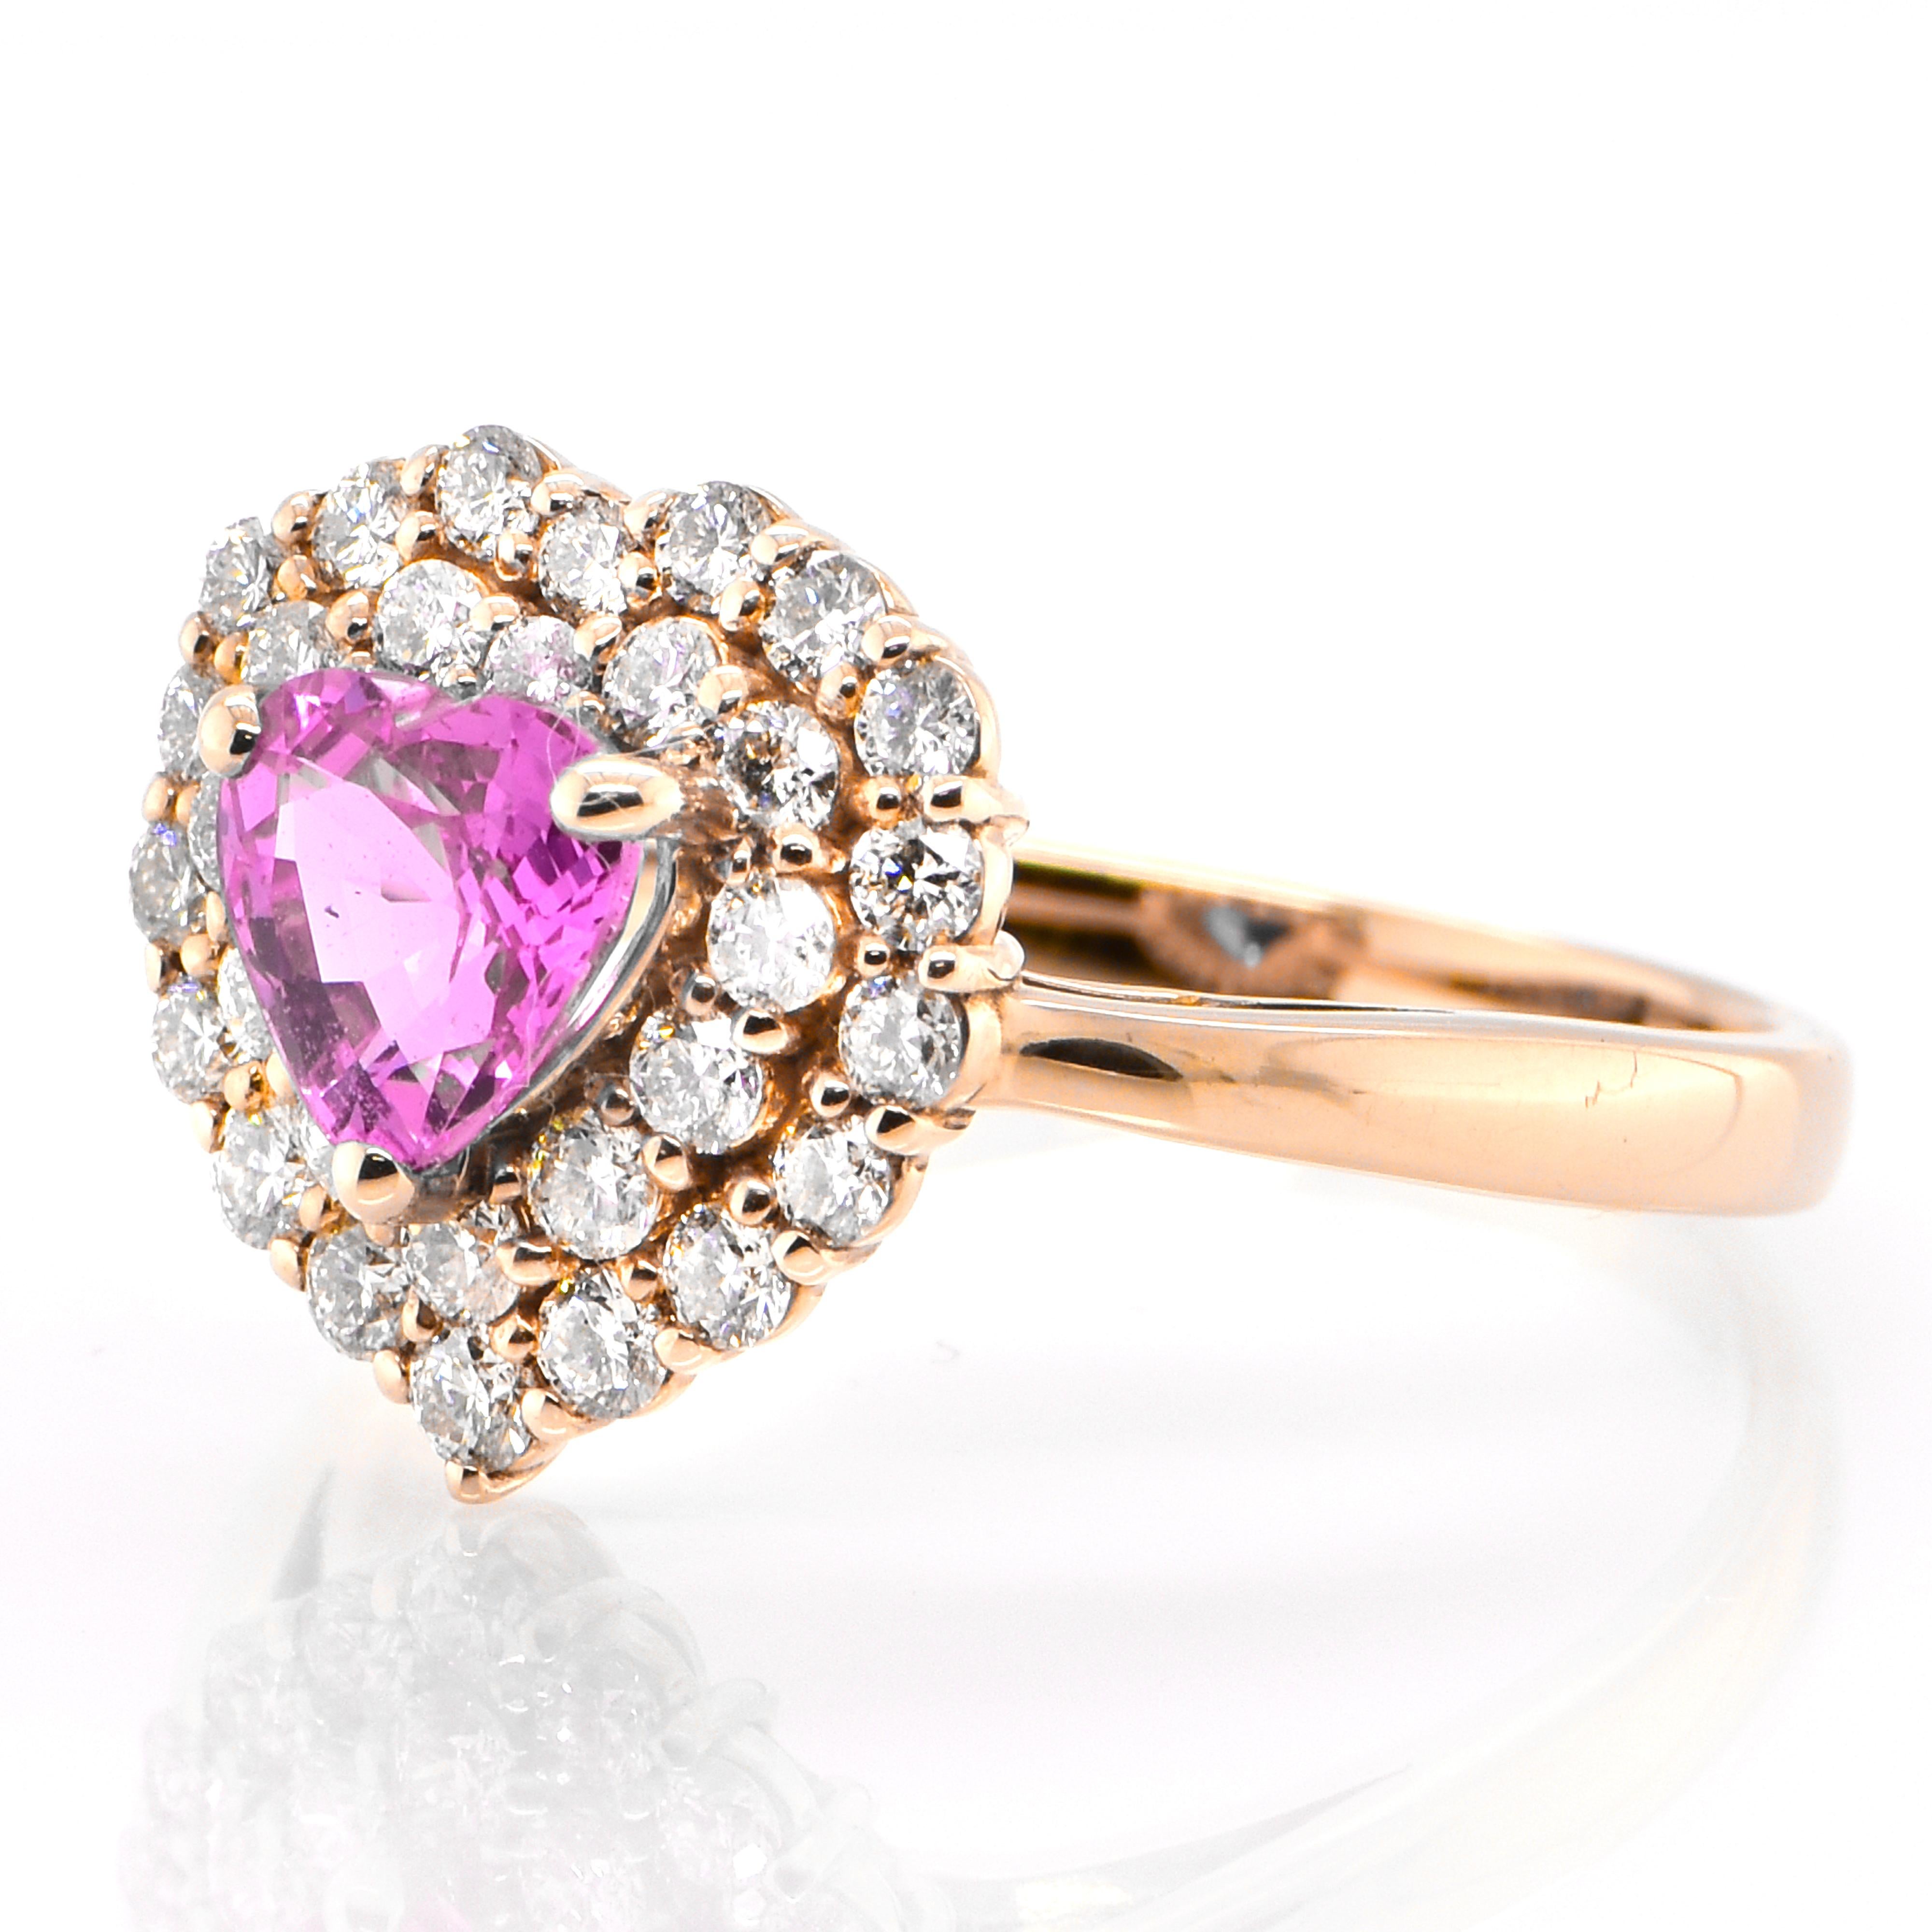 Modern 1.06 Carat Heart-Cut Pink Sapphire and Diamond Ring Set in 18 Karat Pink Gold